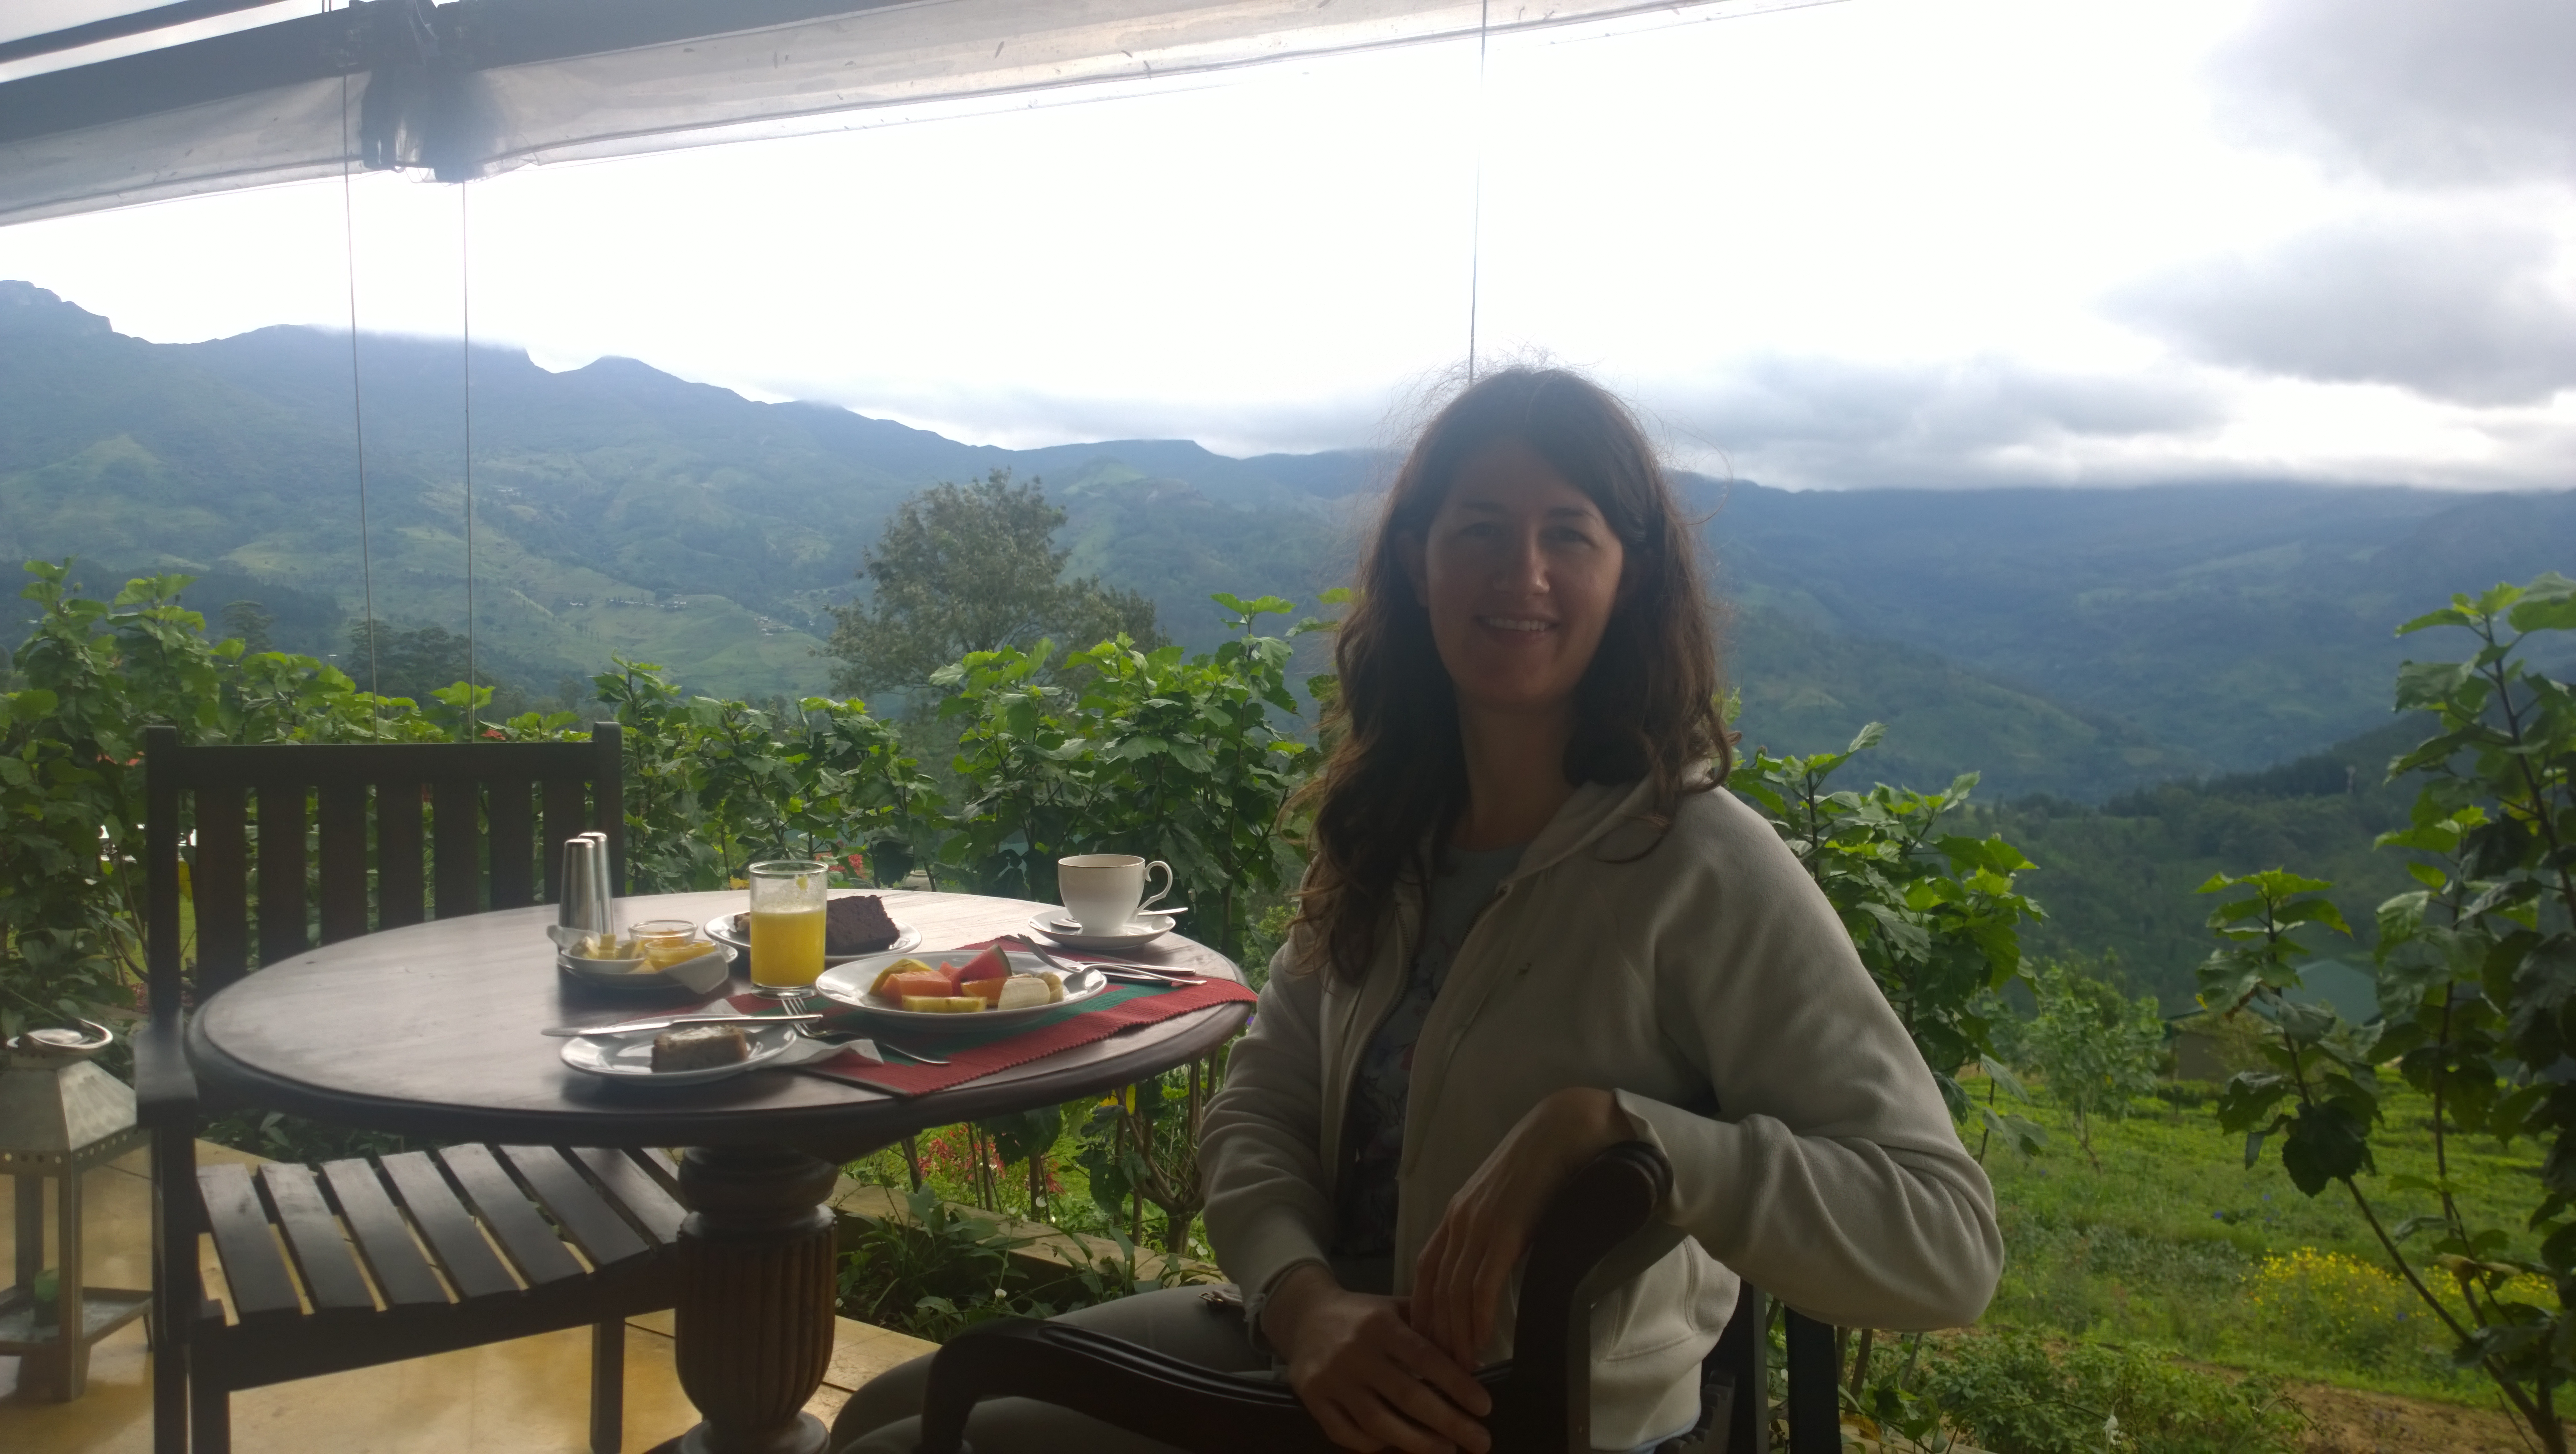 Enjoying a nice breakfast with beautiful views at Madulkelle in Sri Lanka